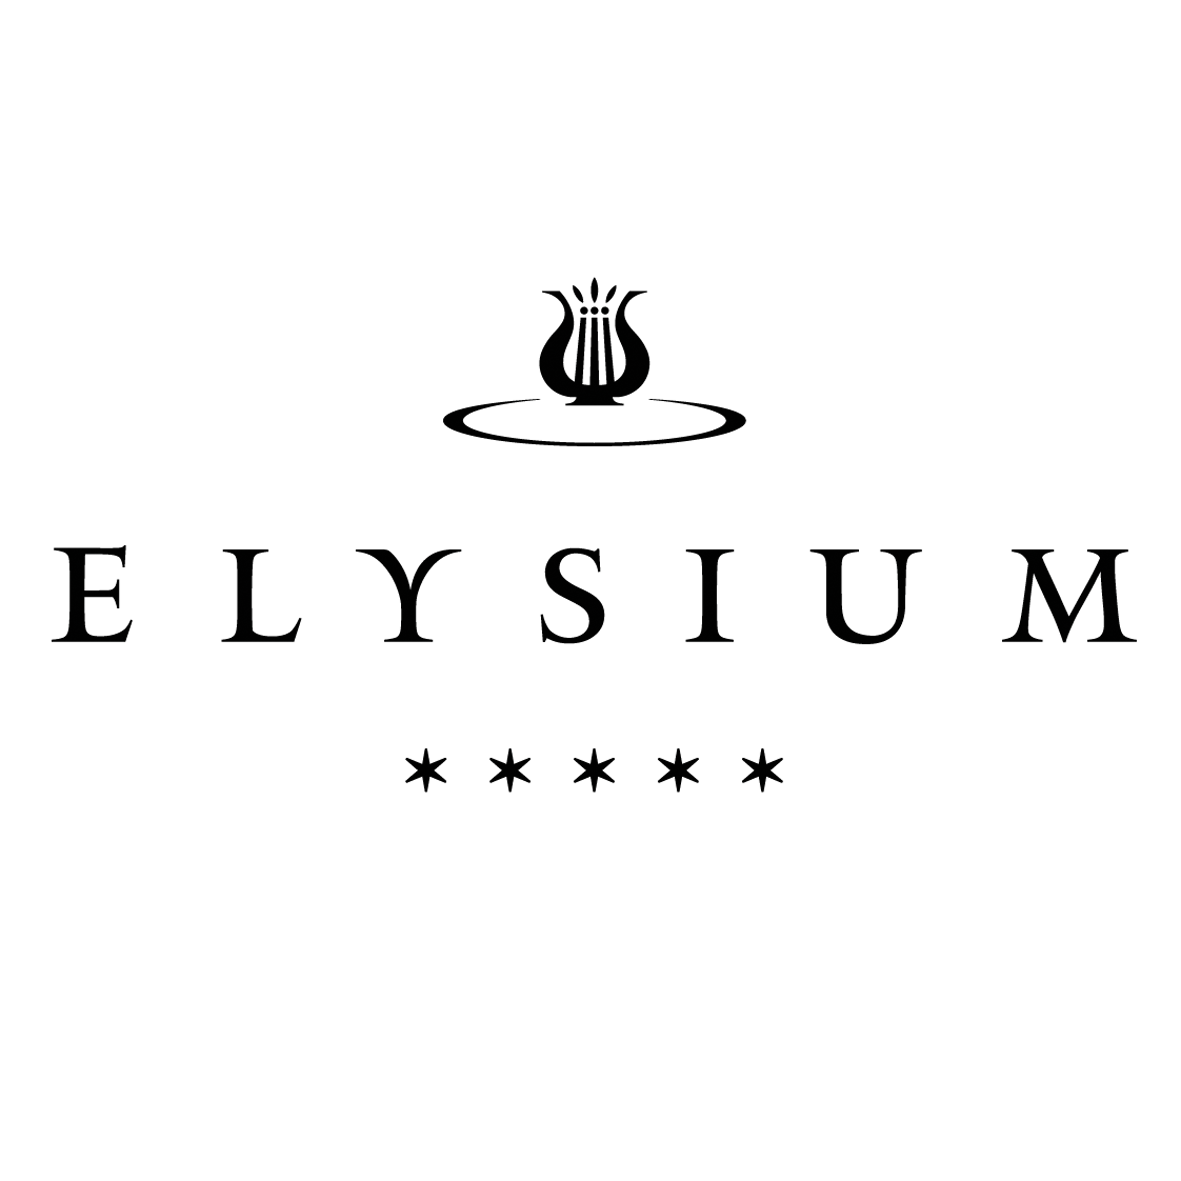 The Elysium